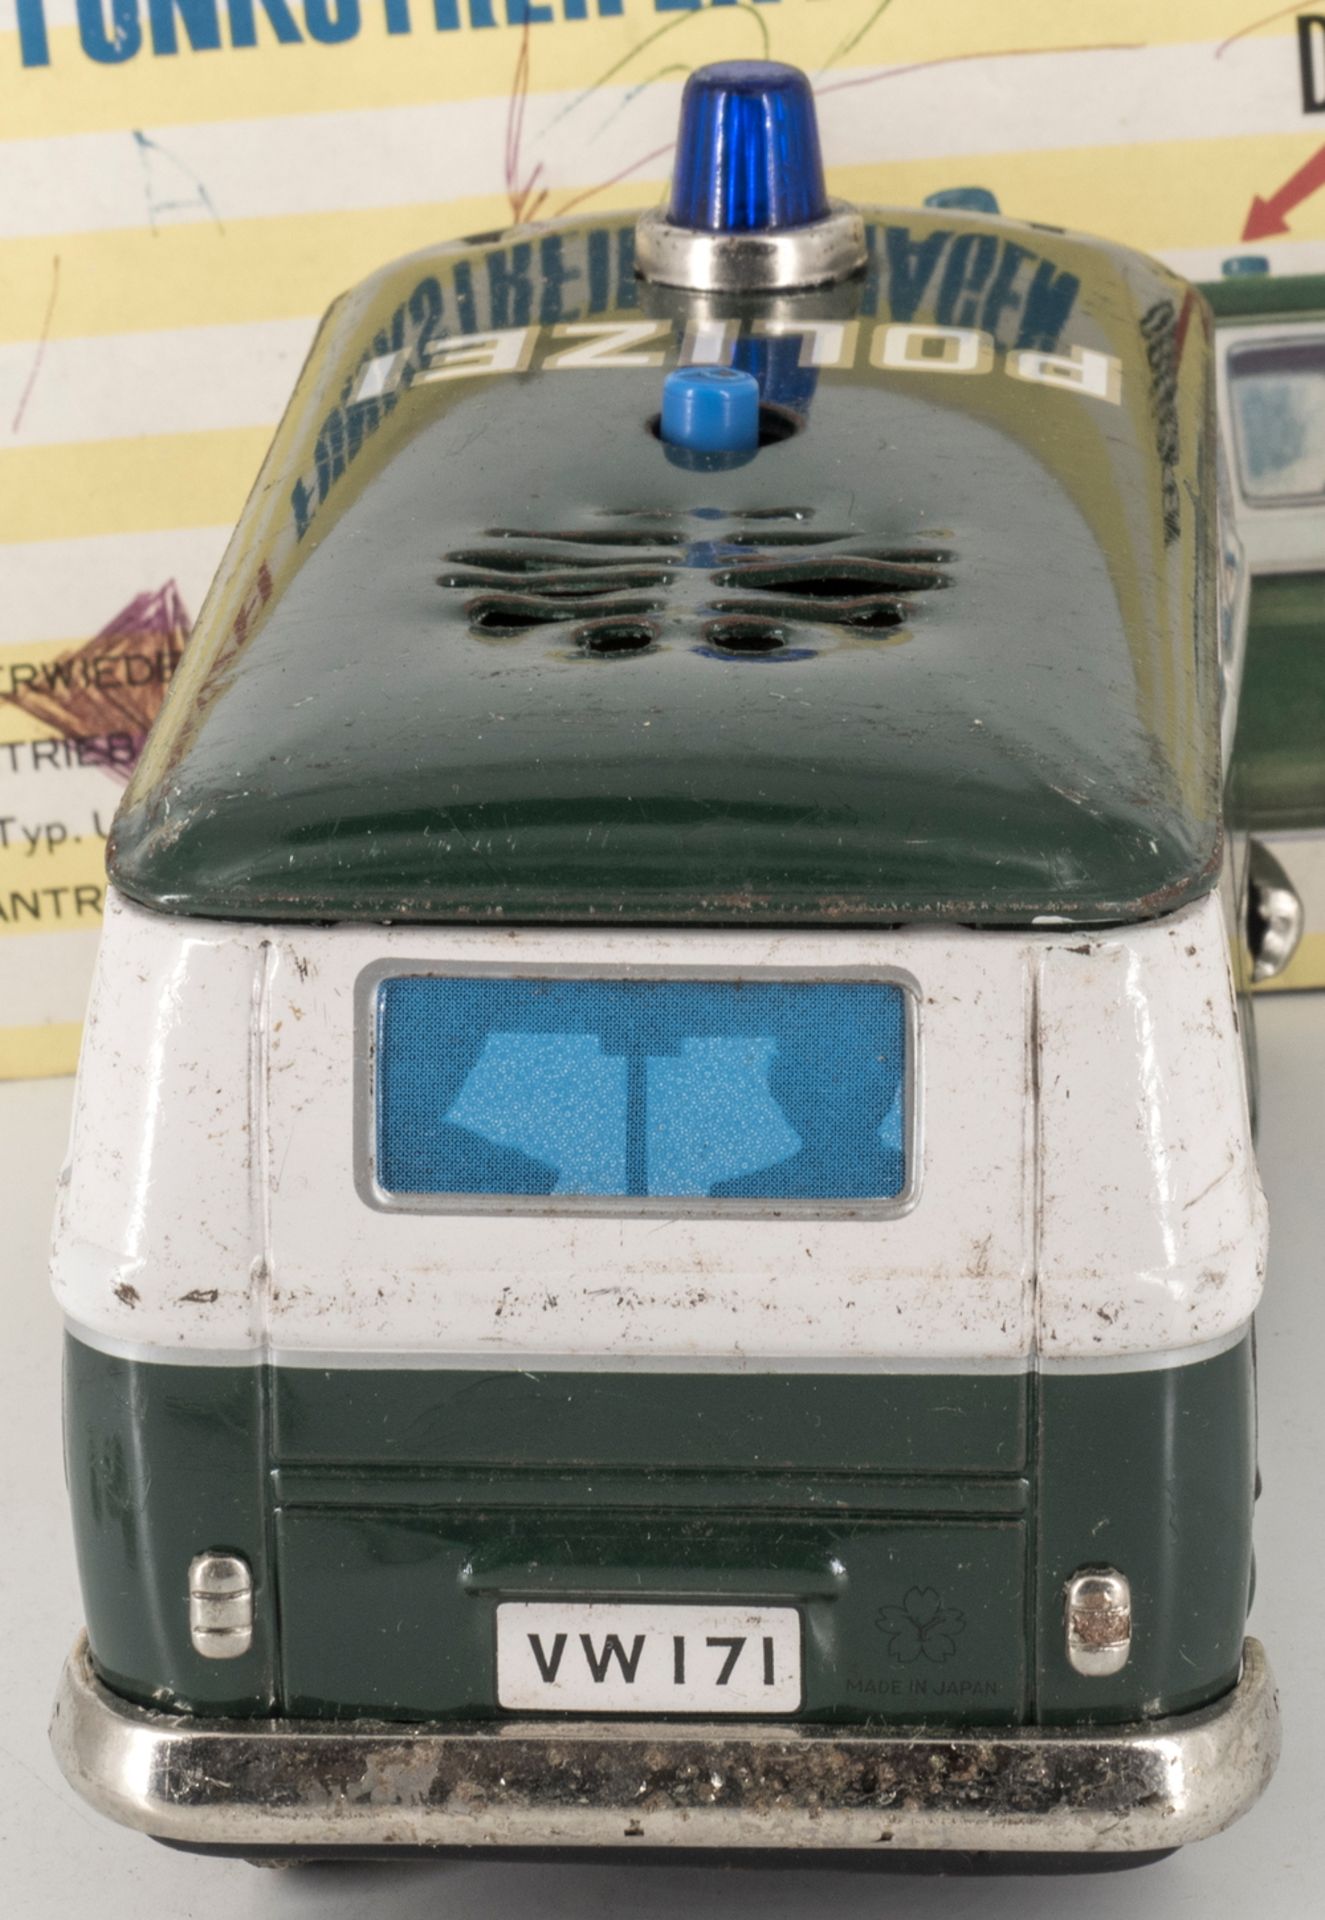 Yonezawa Polizei Funkstreifenwagen VW T1. Blech. 60er Jahre. Friktionsantrieb, - Image 4 of 5